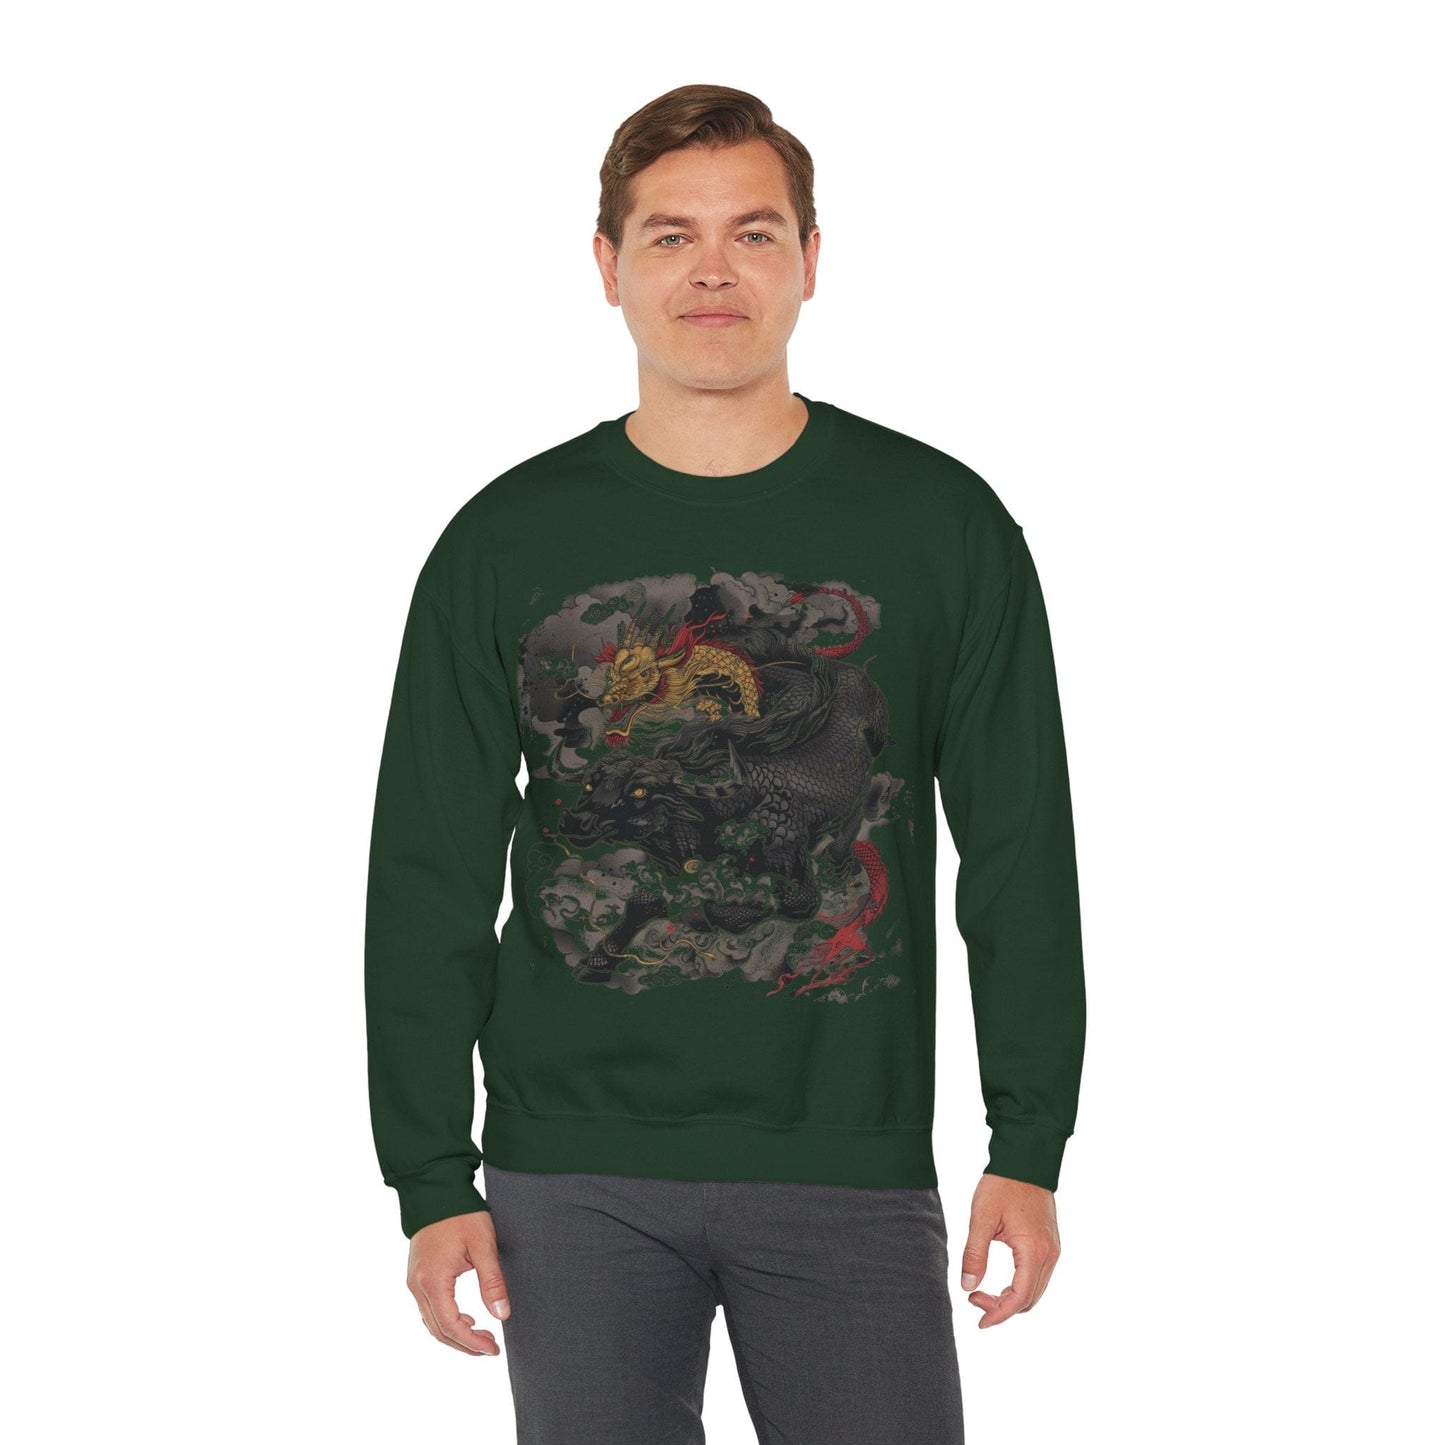 Sweatshirt Eastern Mythos Dragon-Taurus Sweater: Fusion of Strength